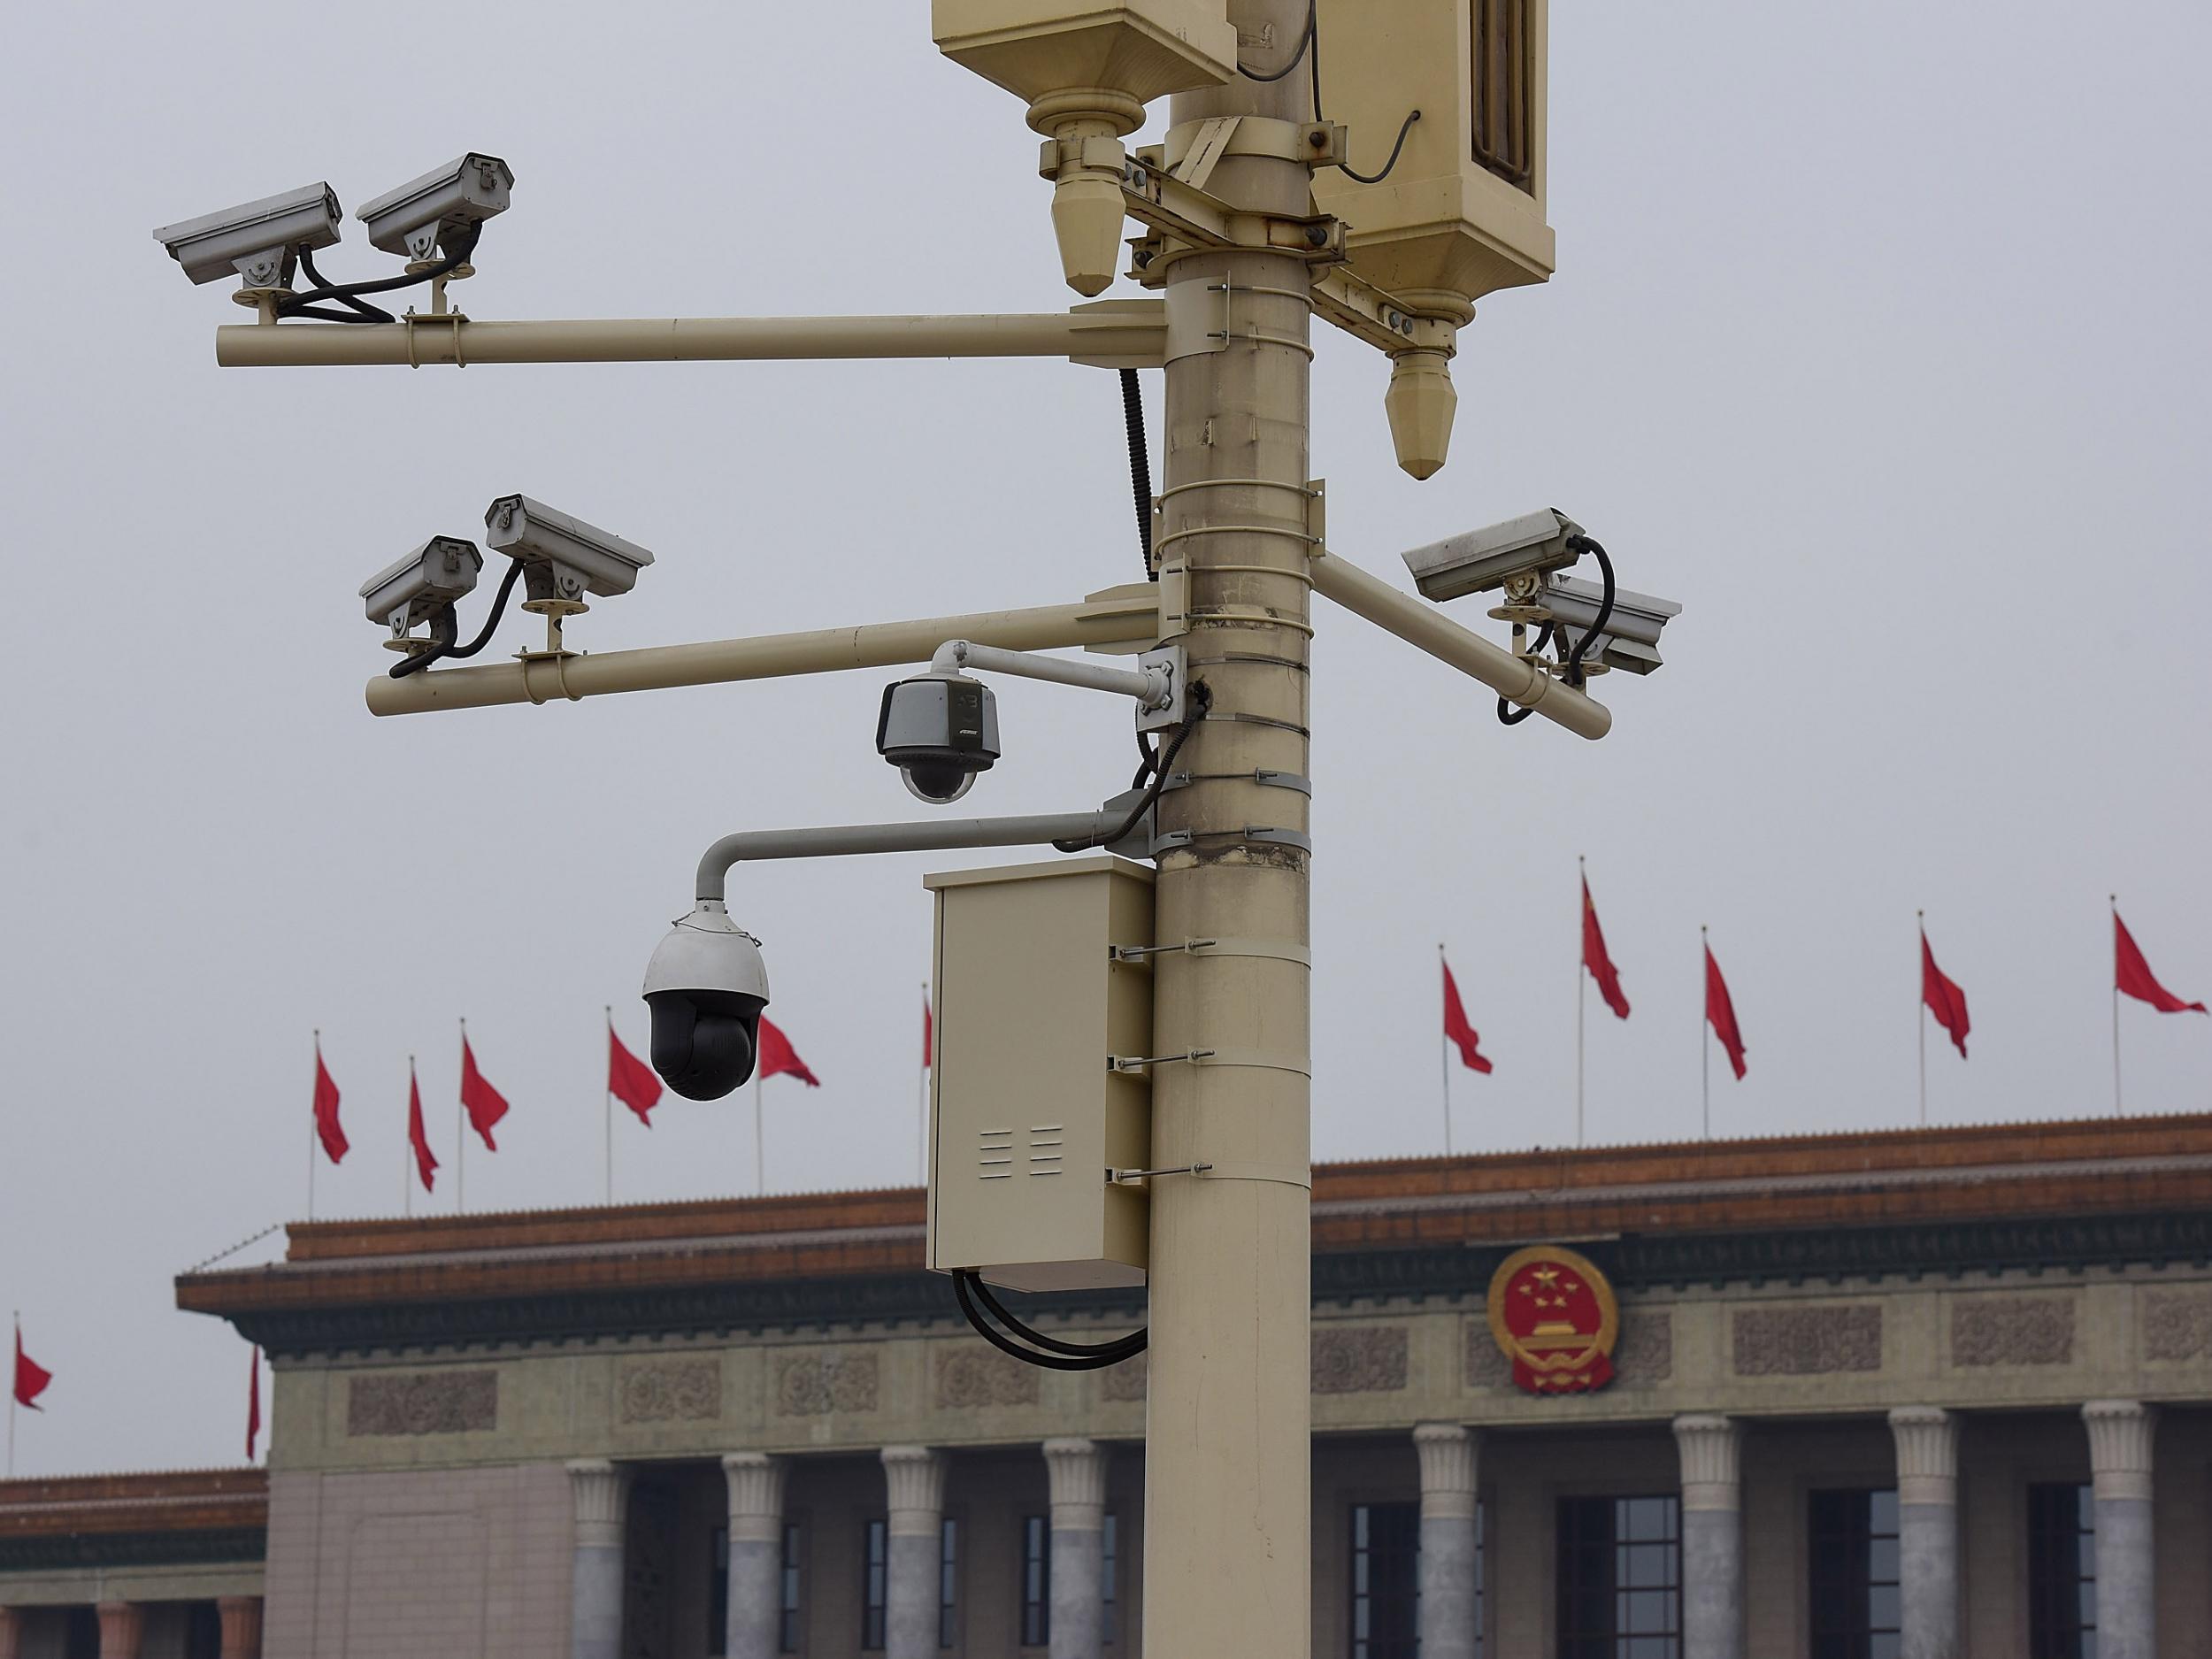 Security cameras in Tiananmen Square, Beijing